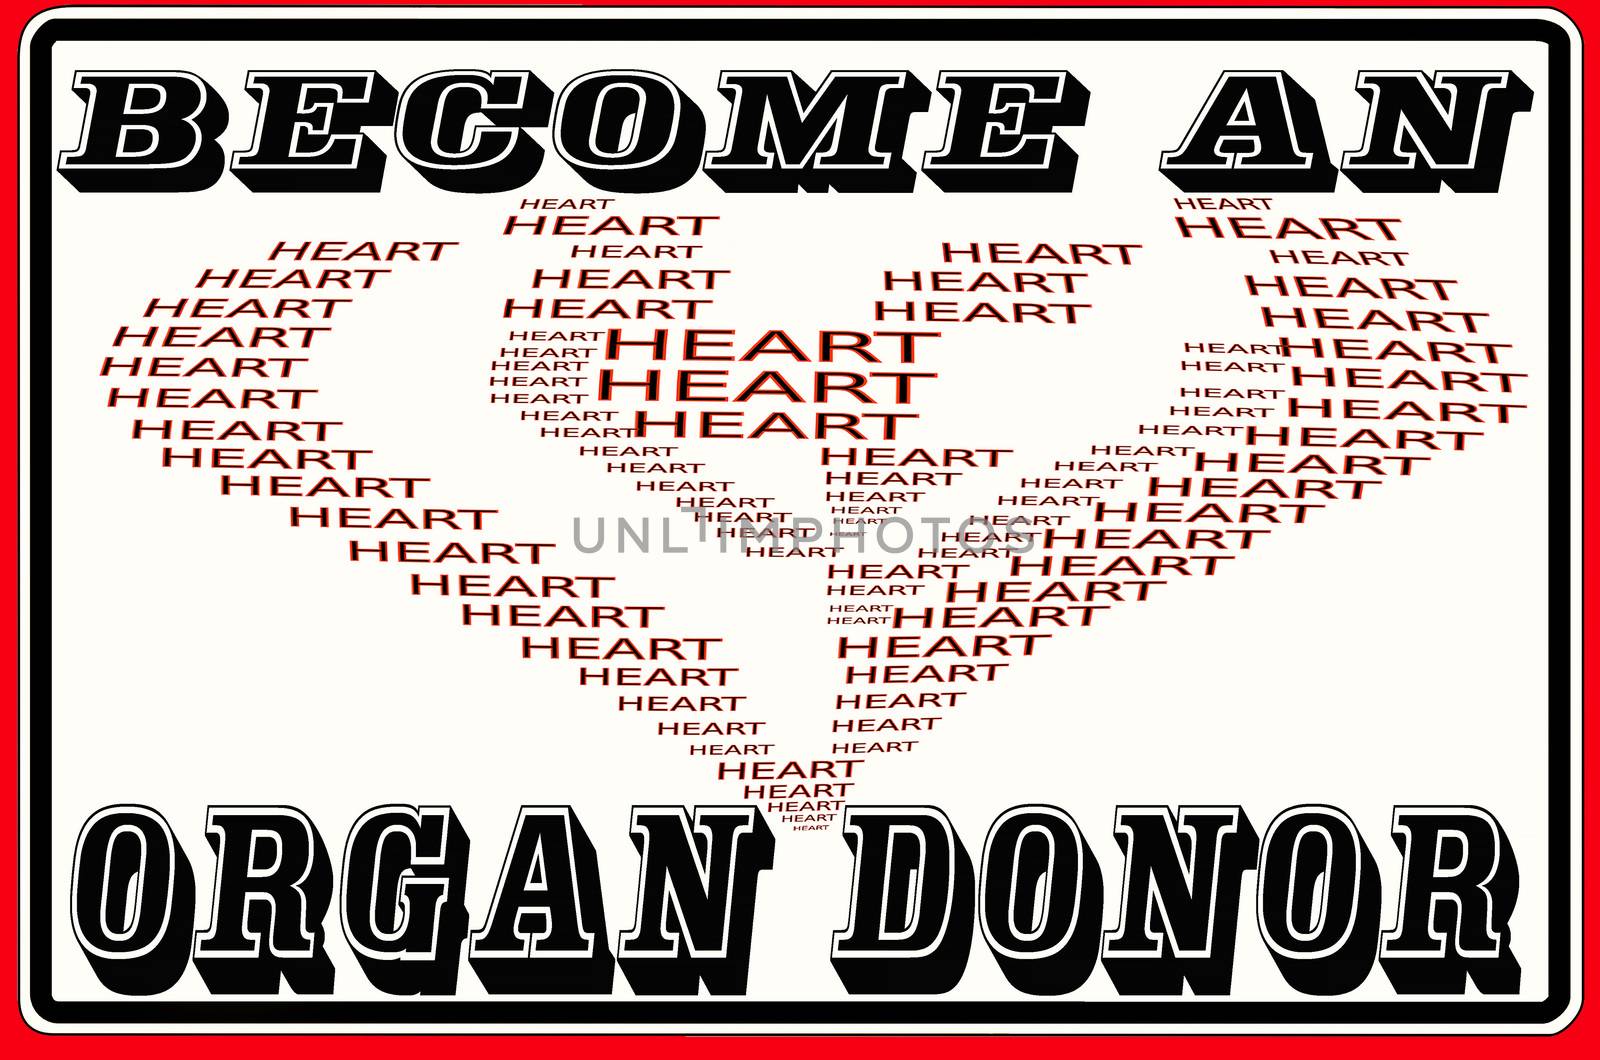 Organ Donor by JFsPic